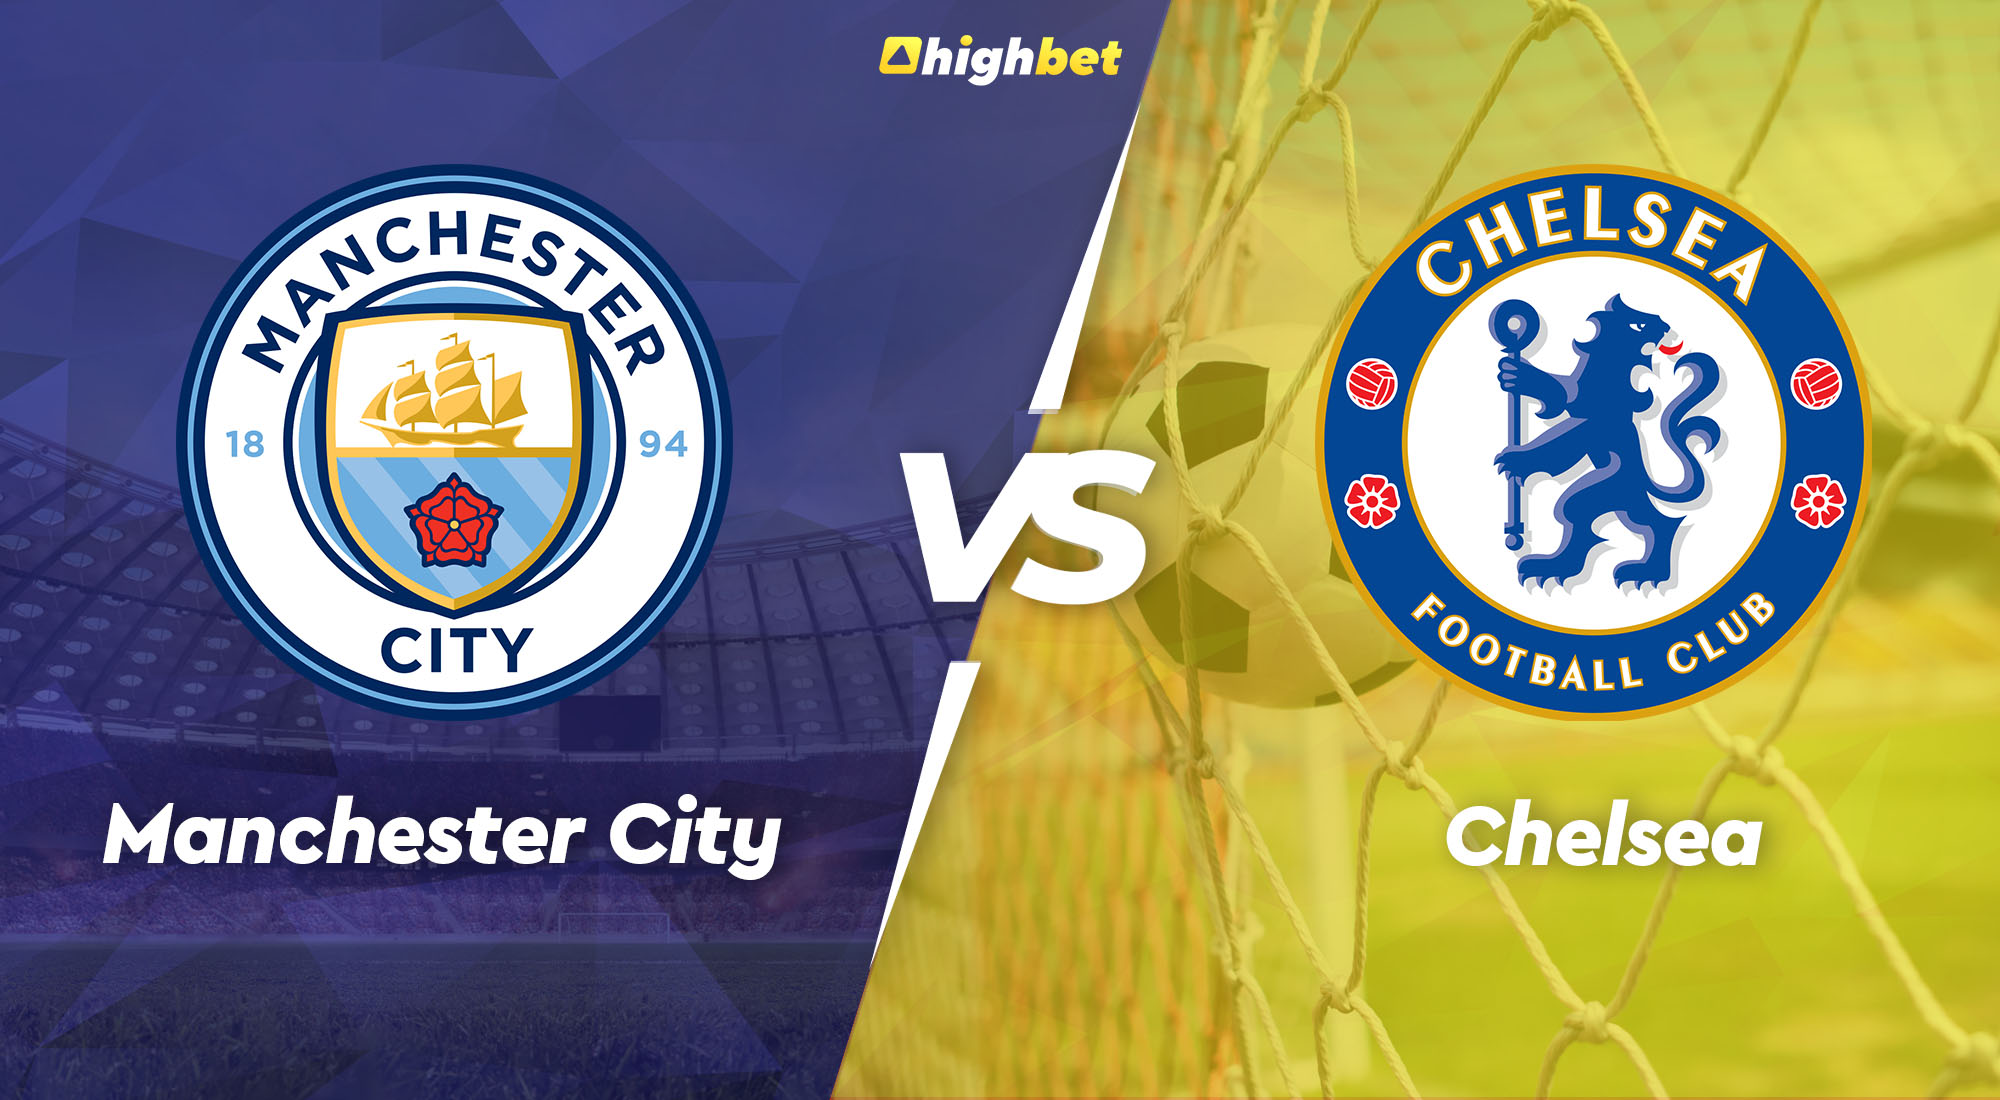 Manchester City vs Chelsea - highbet Premier League Pre-Match Analysis